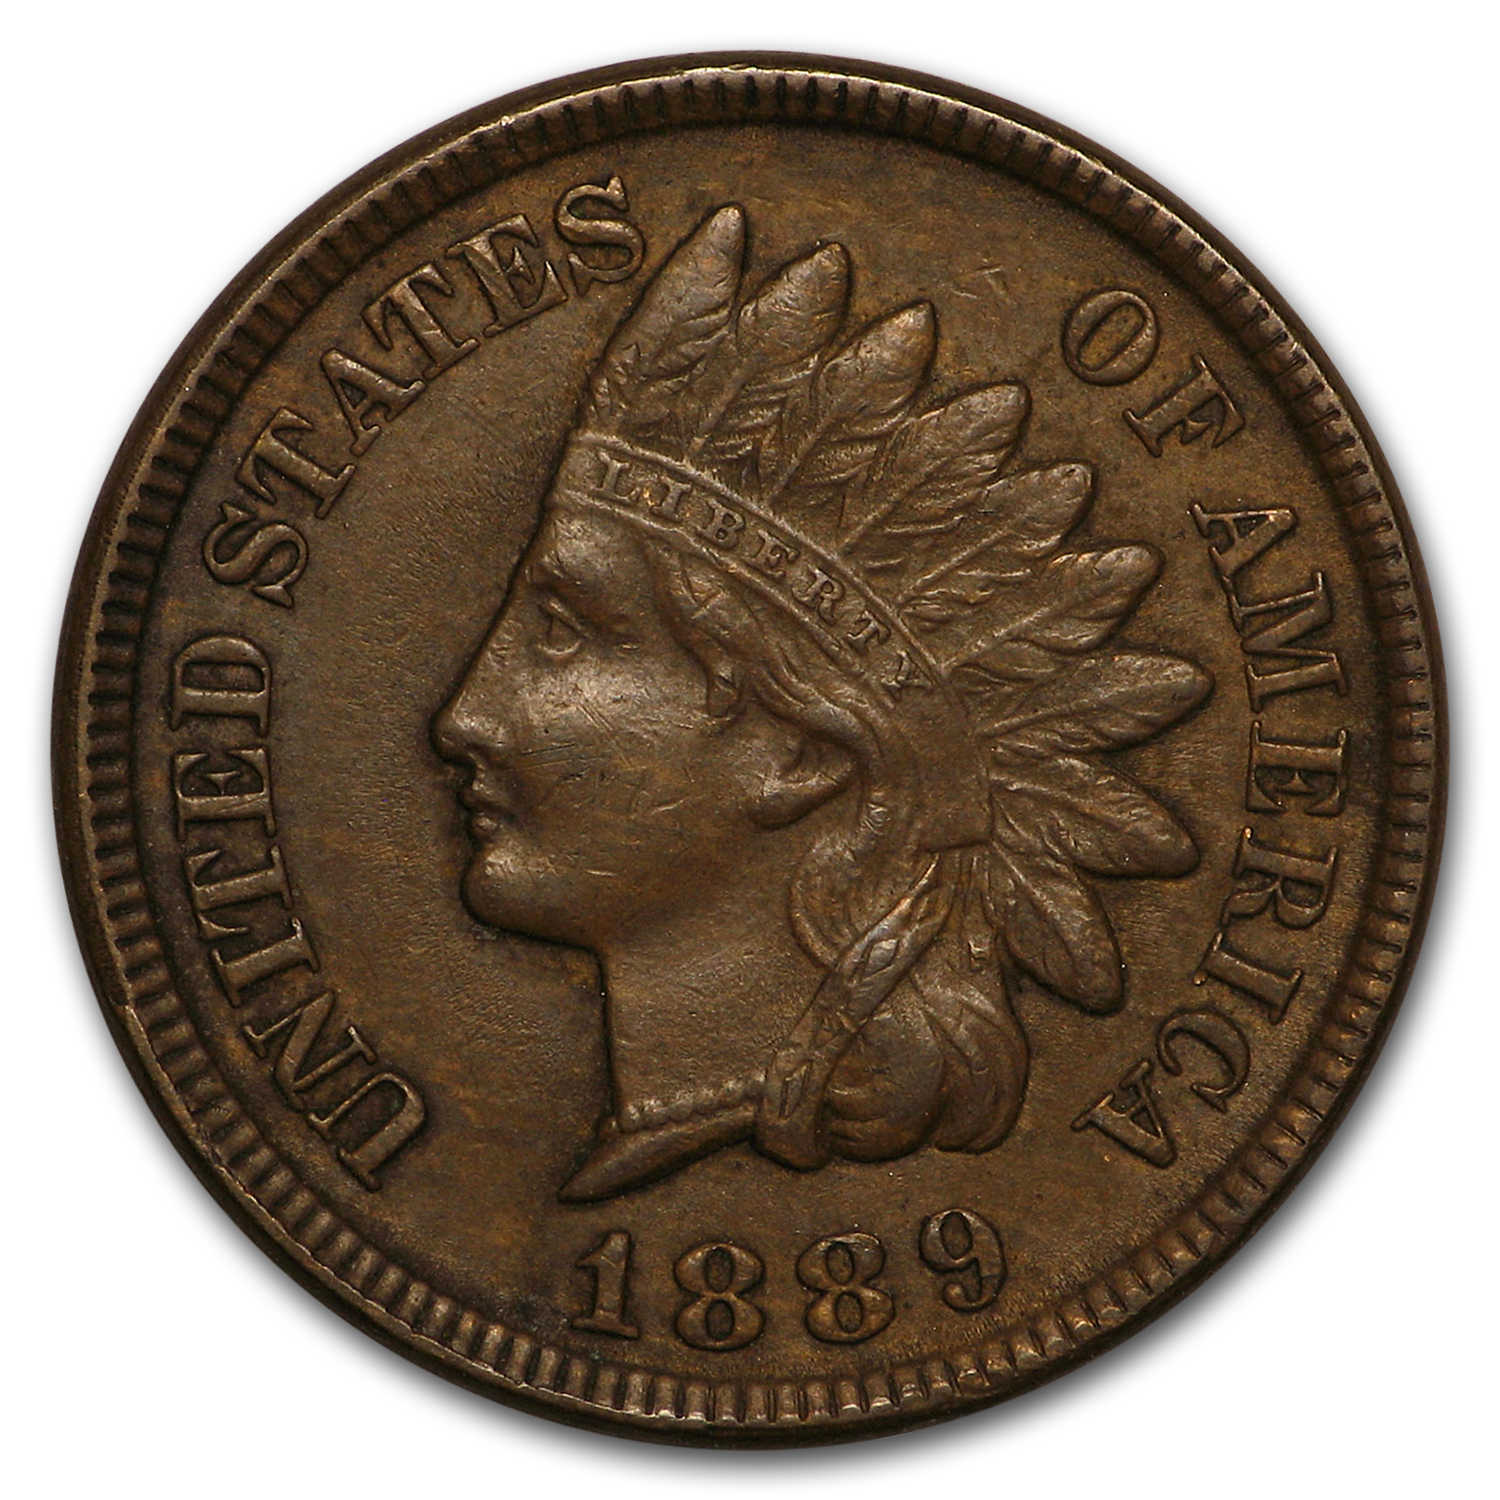 Buy 1889 Indian Head Cent AU